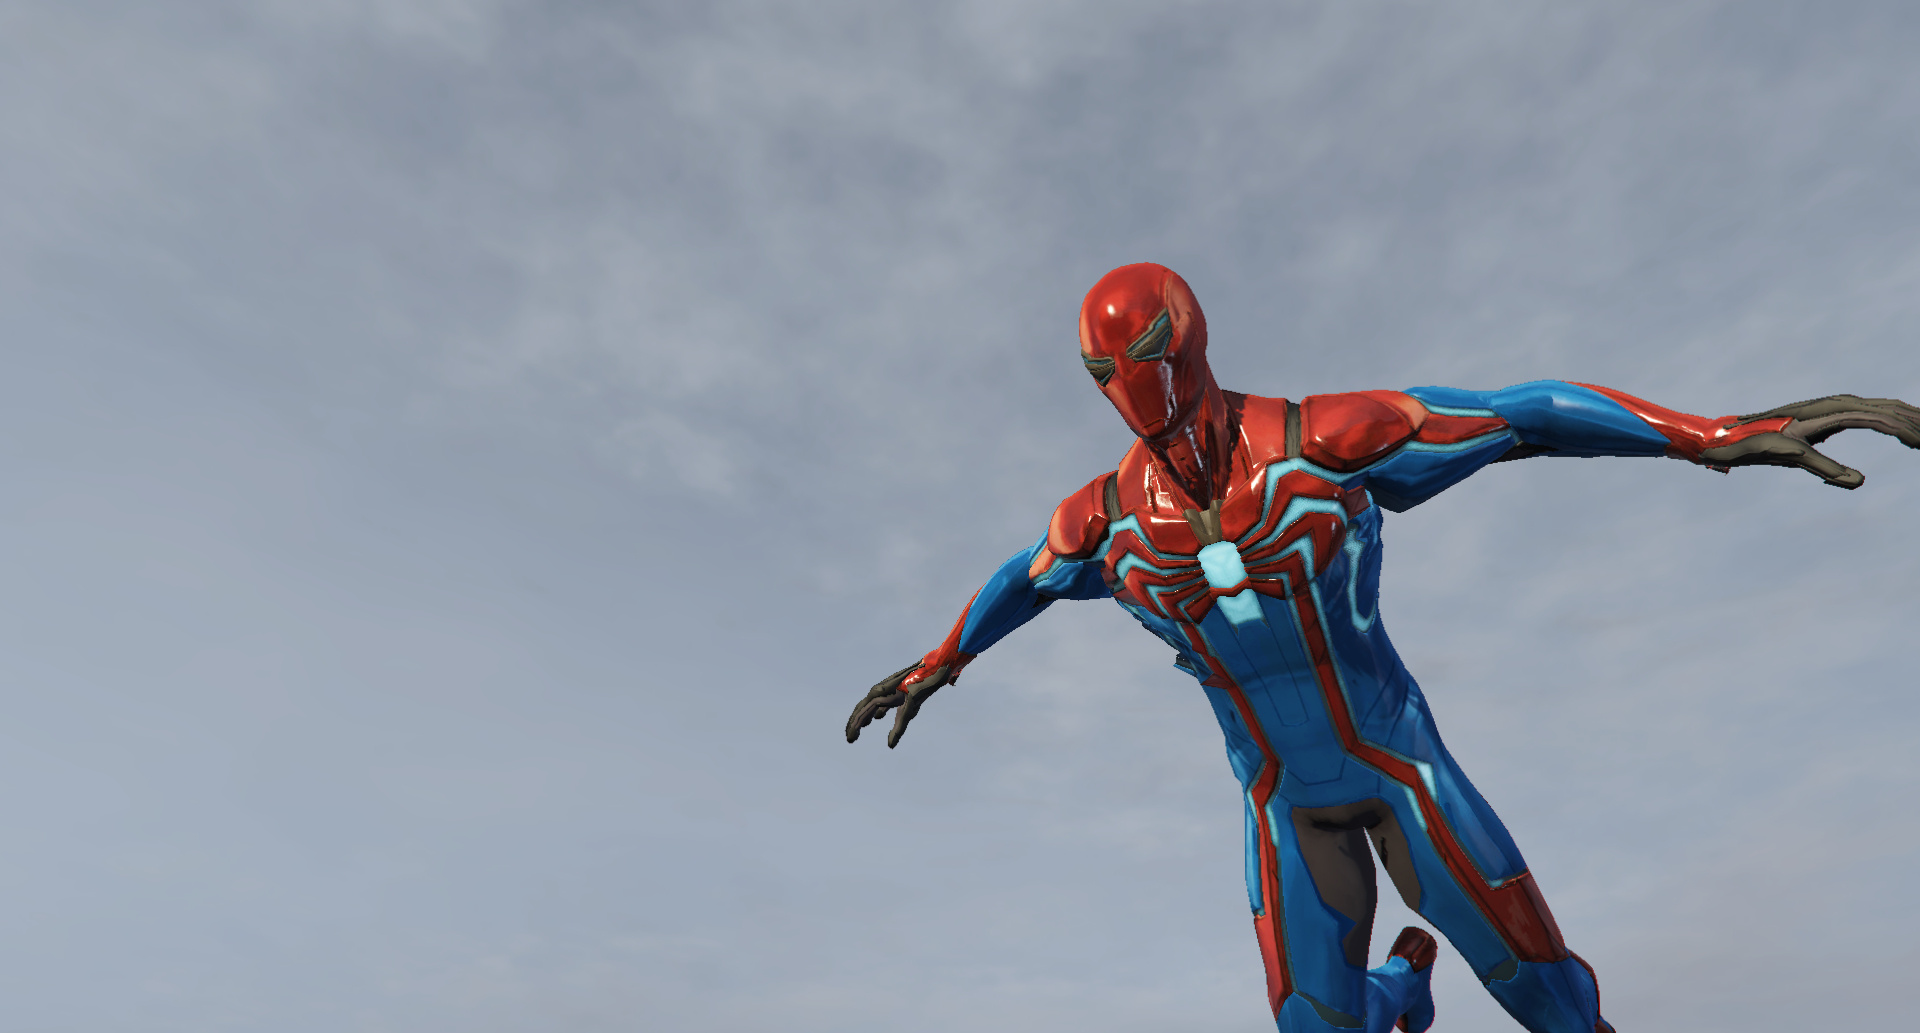 1/10 Marvel's Spider-Man Velocity Suit Statue Pop Culture Shock 906139 |  Man of Action Figures